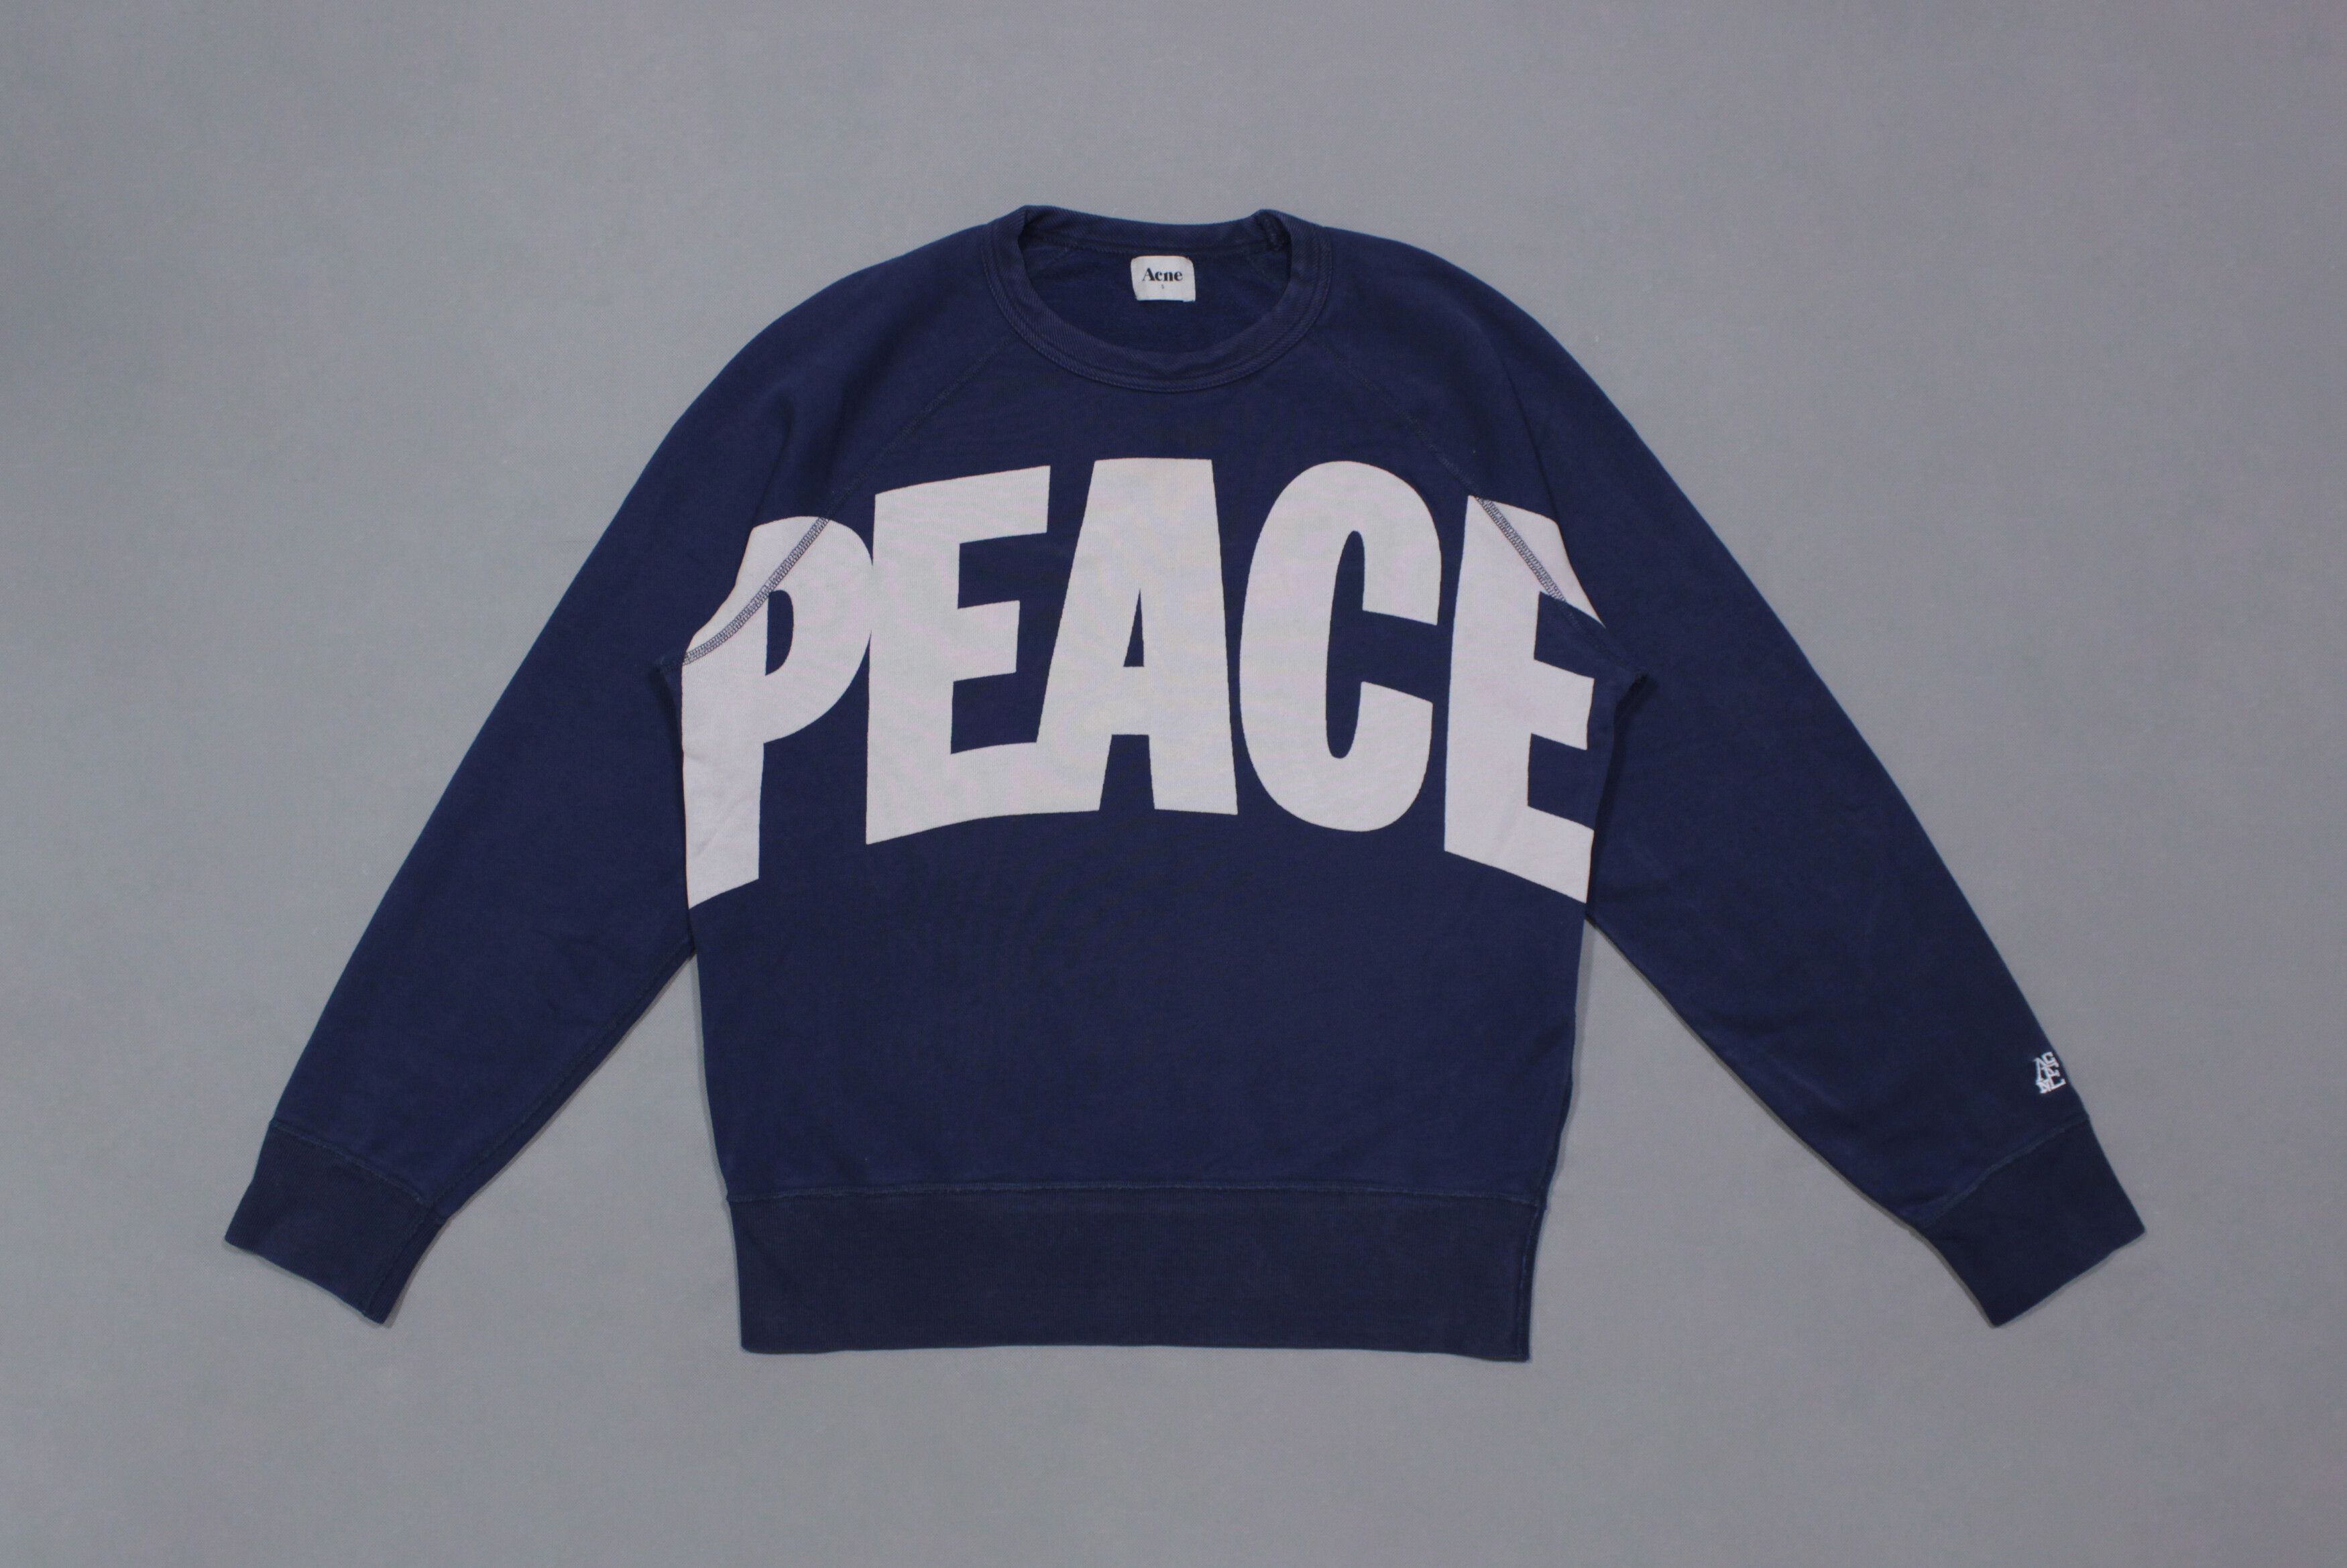 Acne Studios Peace Sweatshirt | Grailed